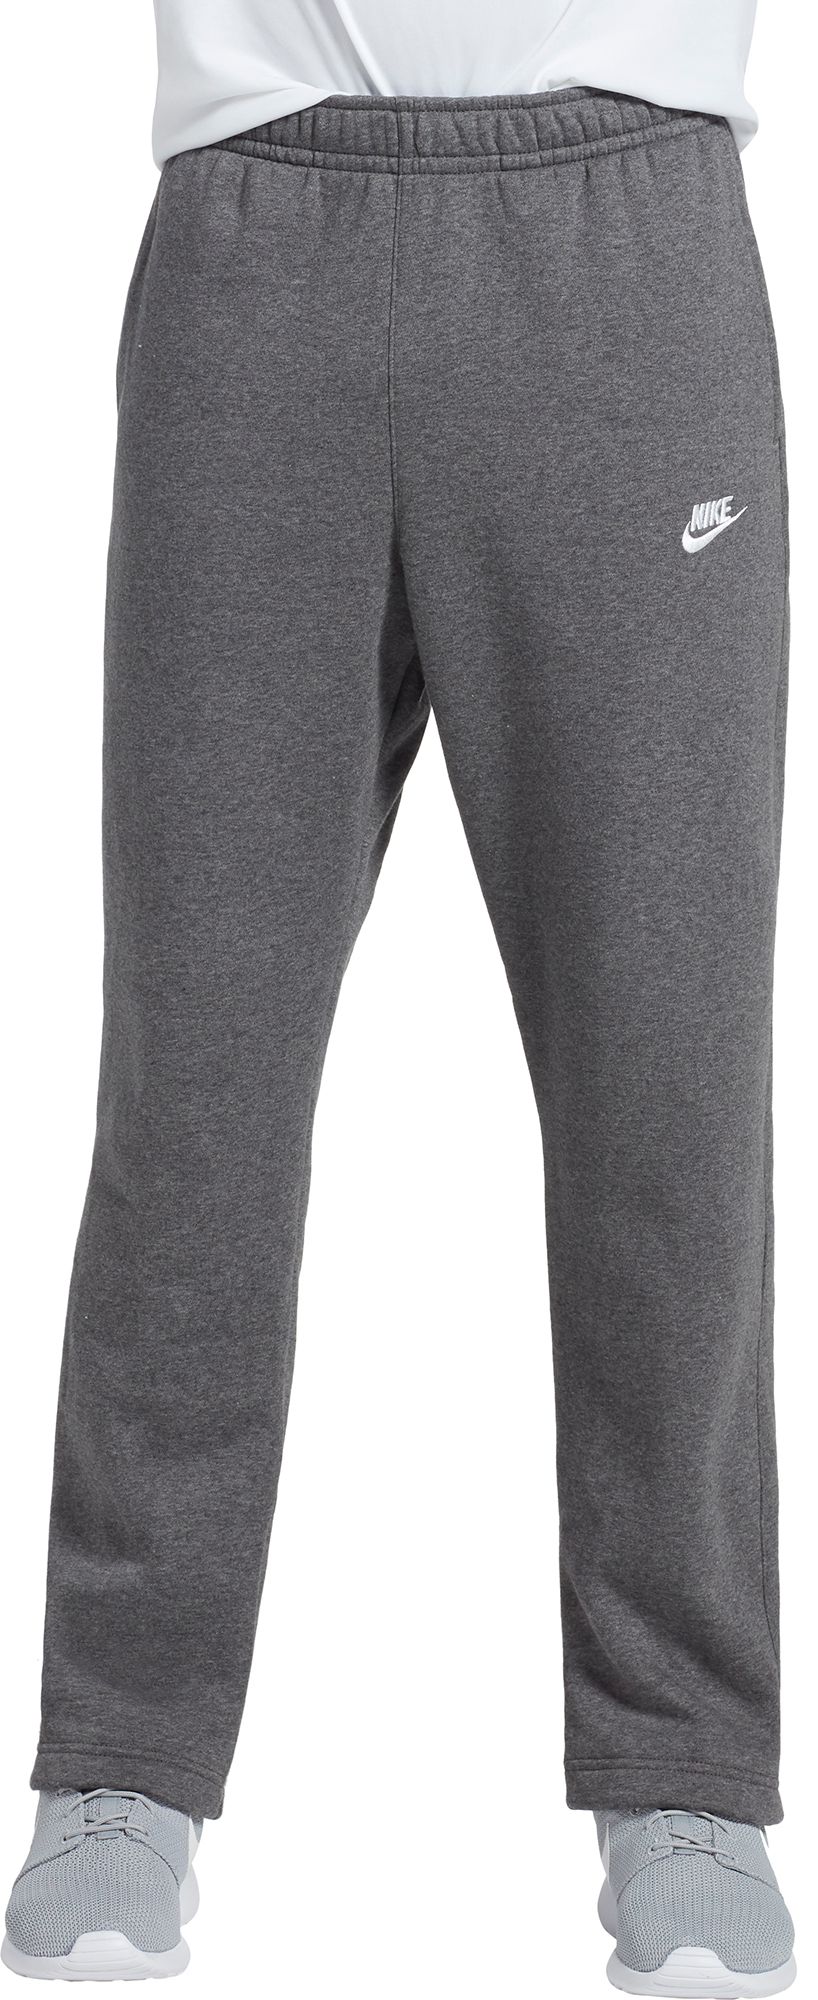 white and grey nike sweatpants